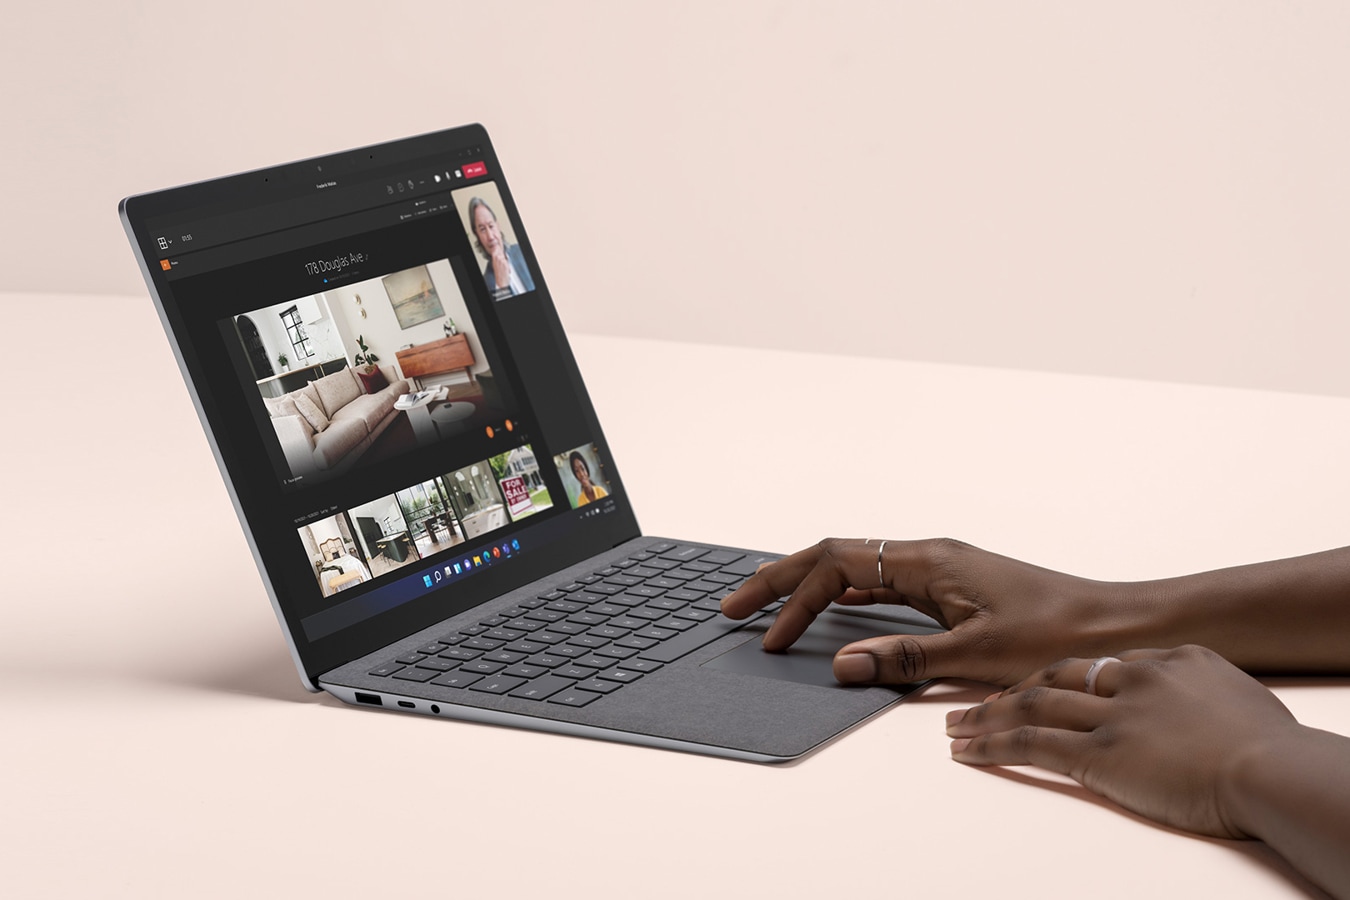 Laptop 4(플래티넘) 디바이스 측면 사진. 화면에는 Microsoft Teams 화상 통화가 표시되어 있습니다.
